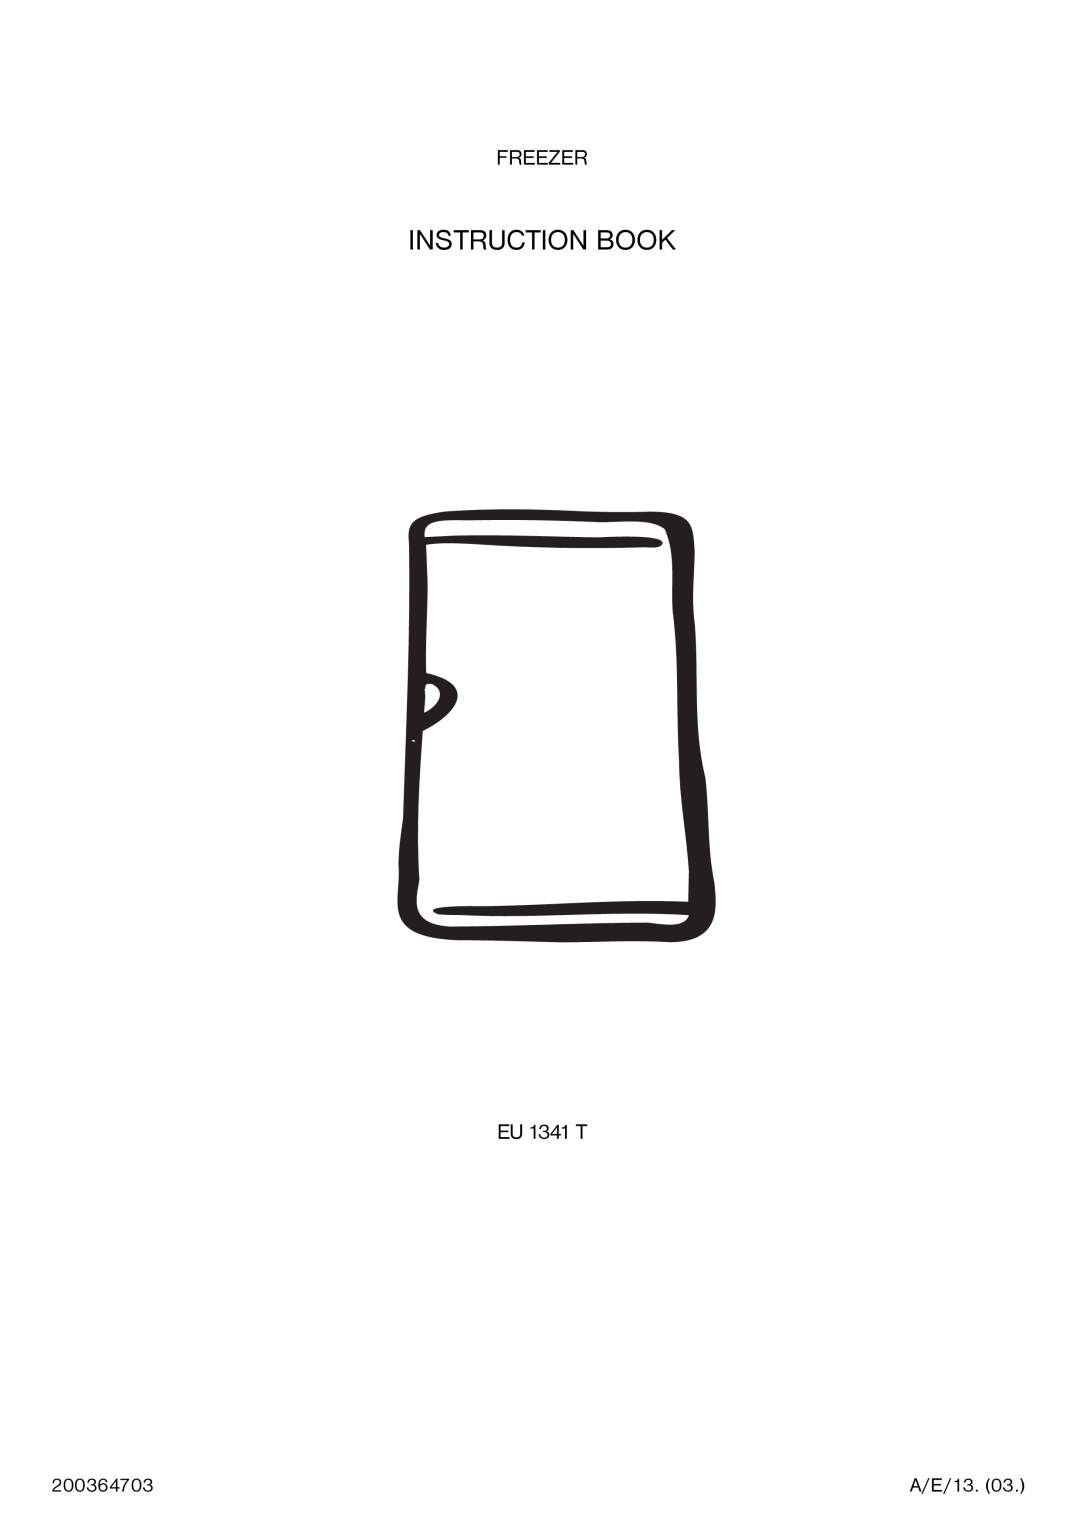 Electrolux EU 1341 T manual Freezer, Instruction Book 